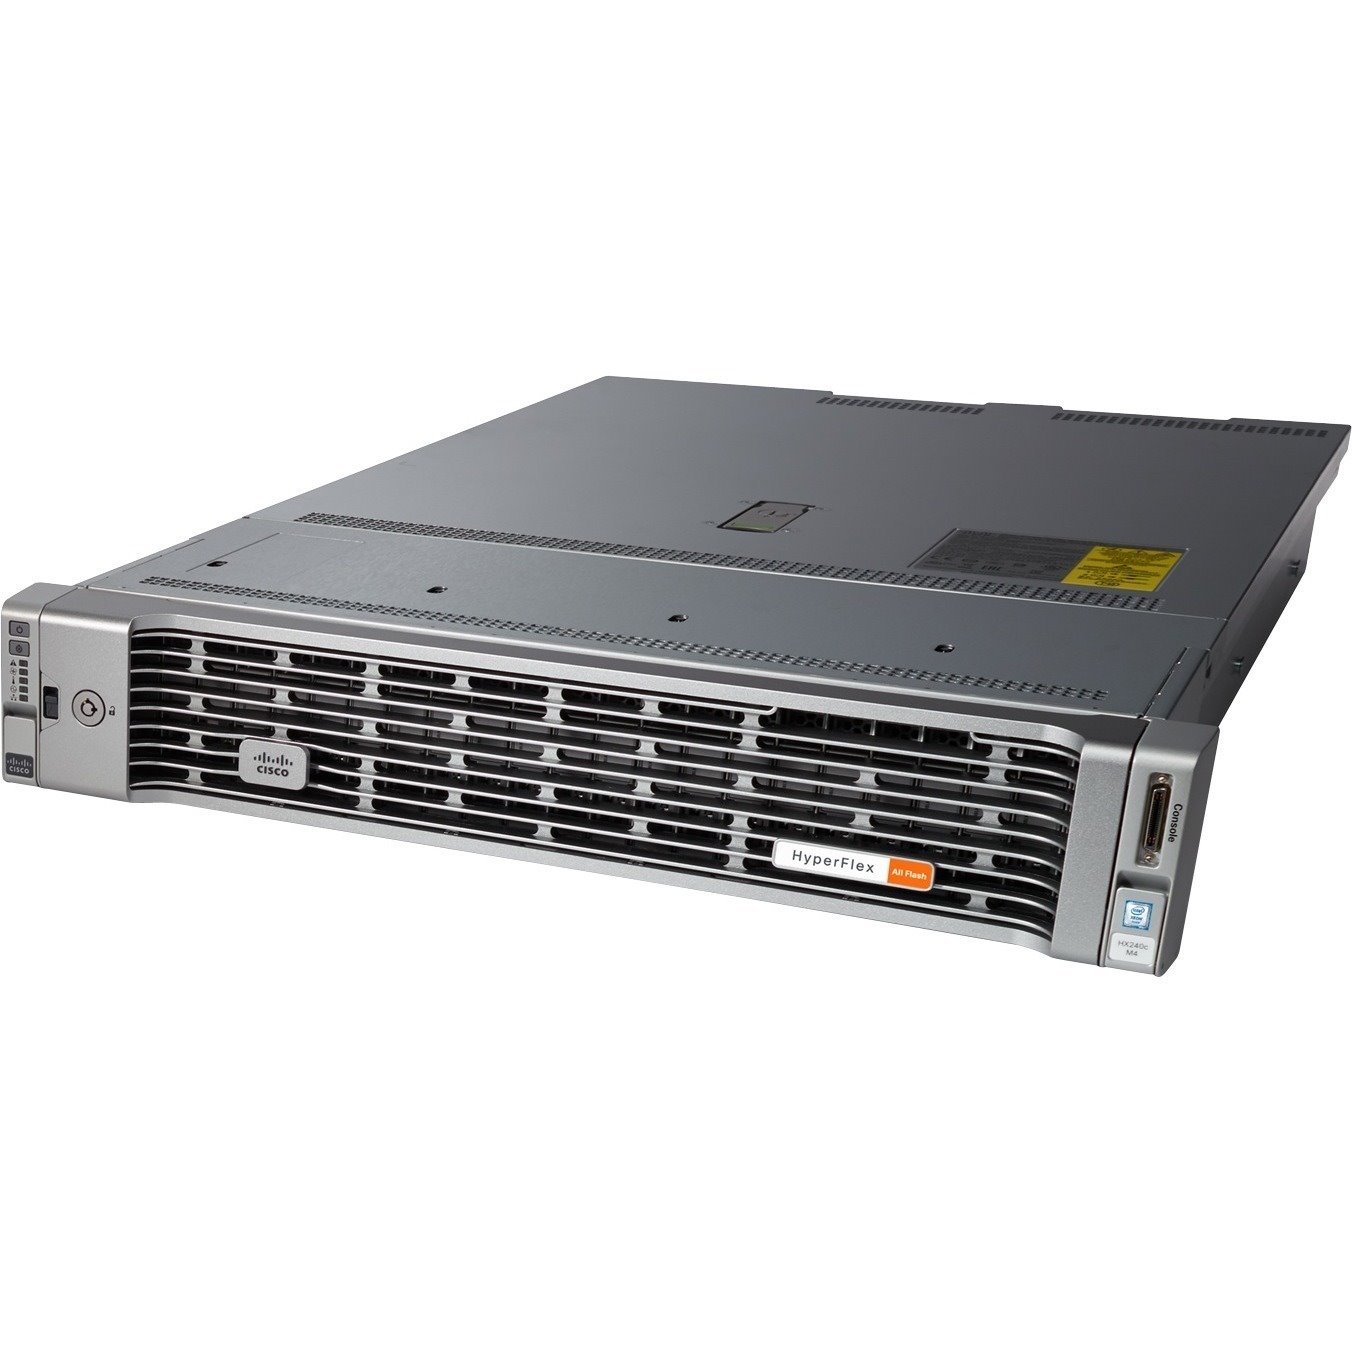 Cisco HyperFlex HX240c M4 2U Rack Server - 2 x Intel Xeon E5-2630 v3 2.40 GHz - 128 GB RAM - 12Gb/s SAS Controller